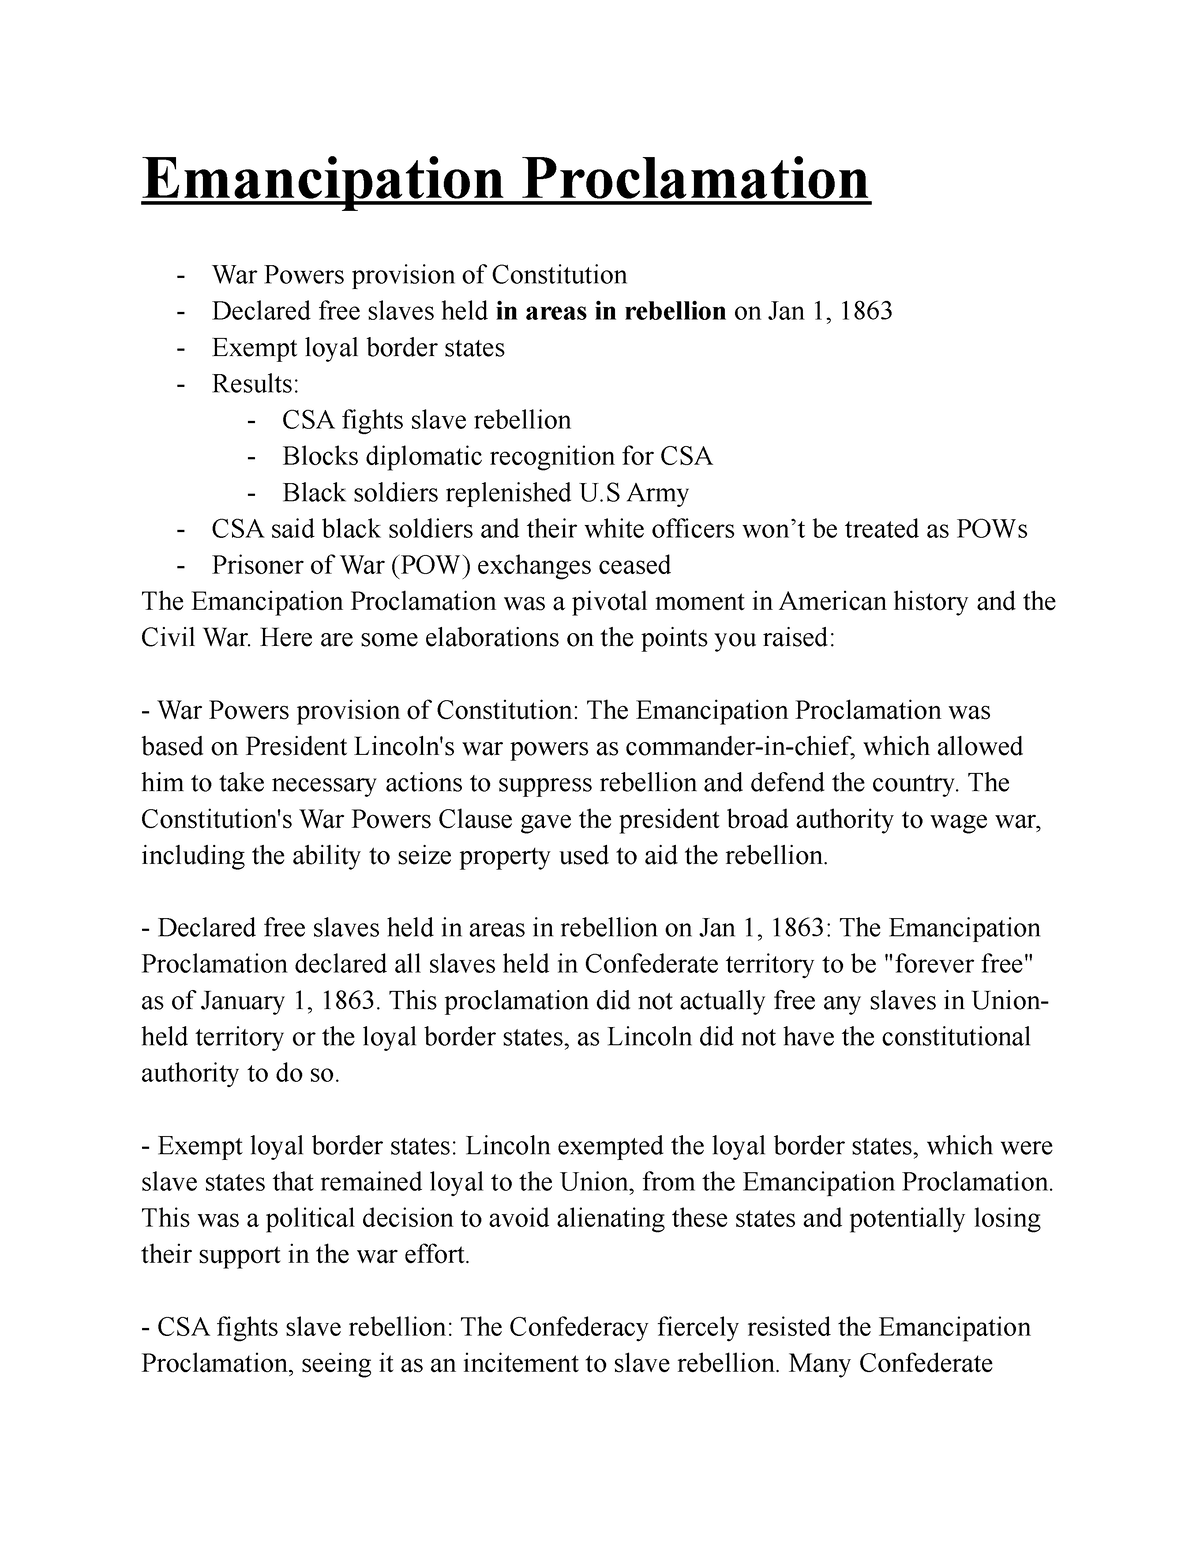 essay questions emancipation proclamation